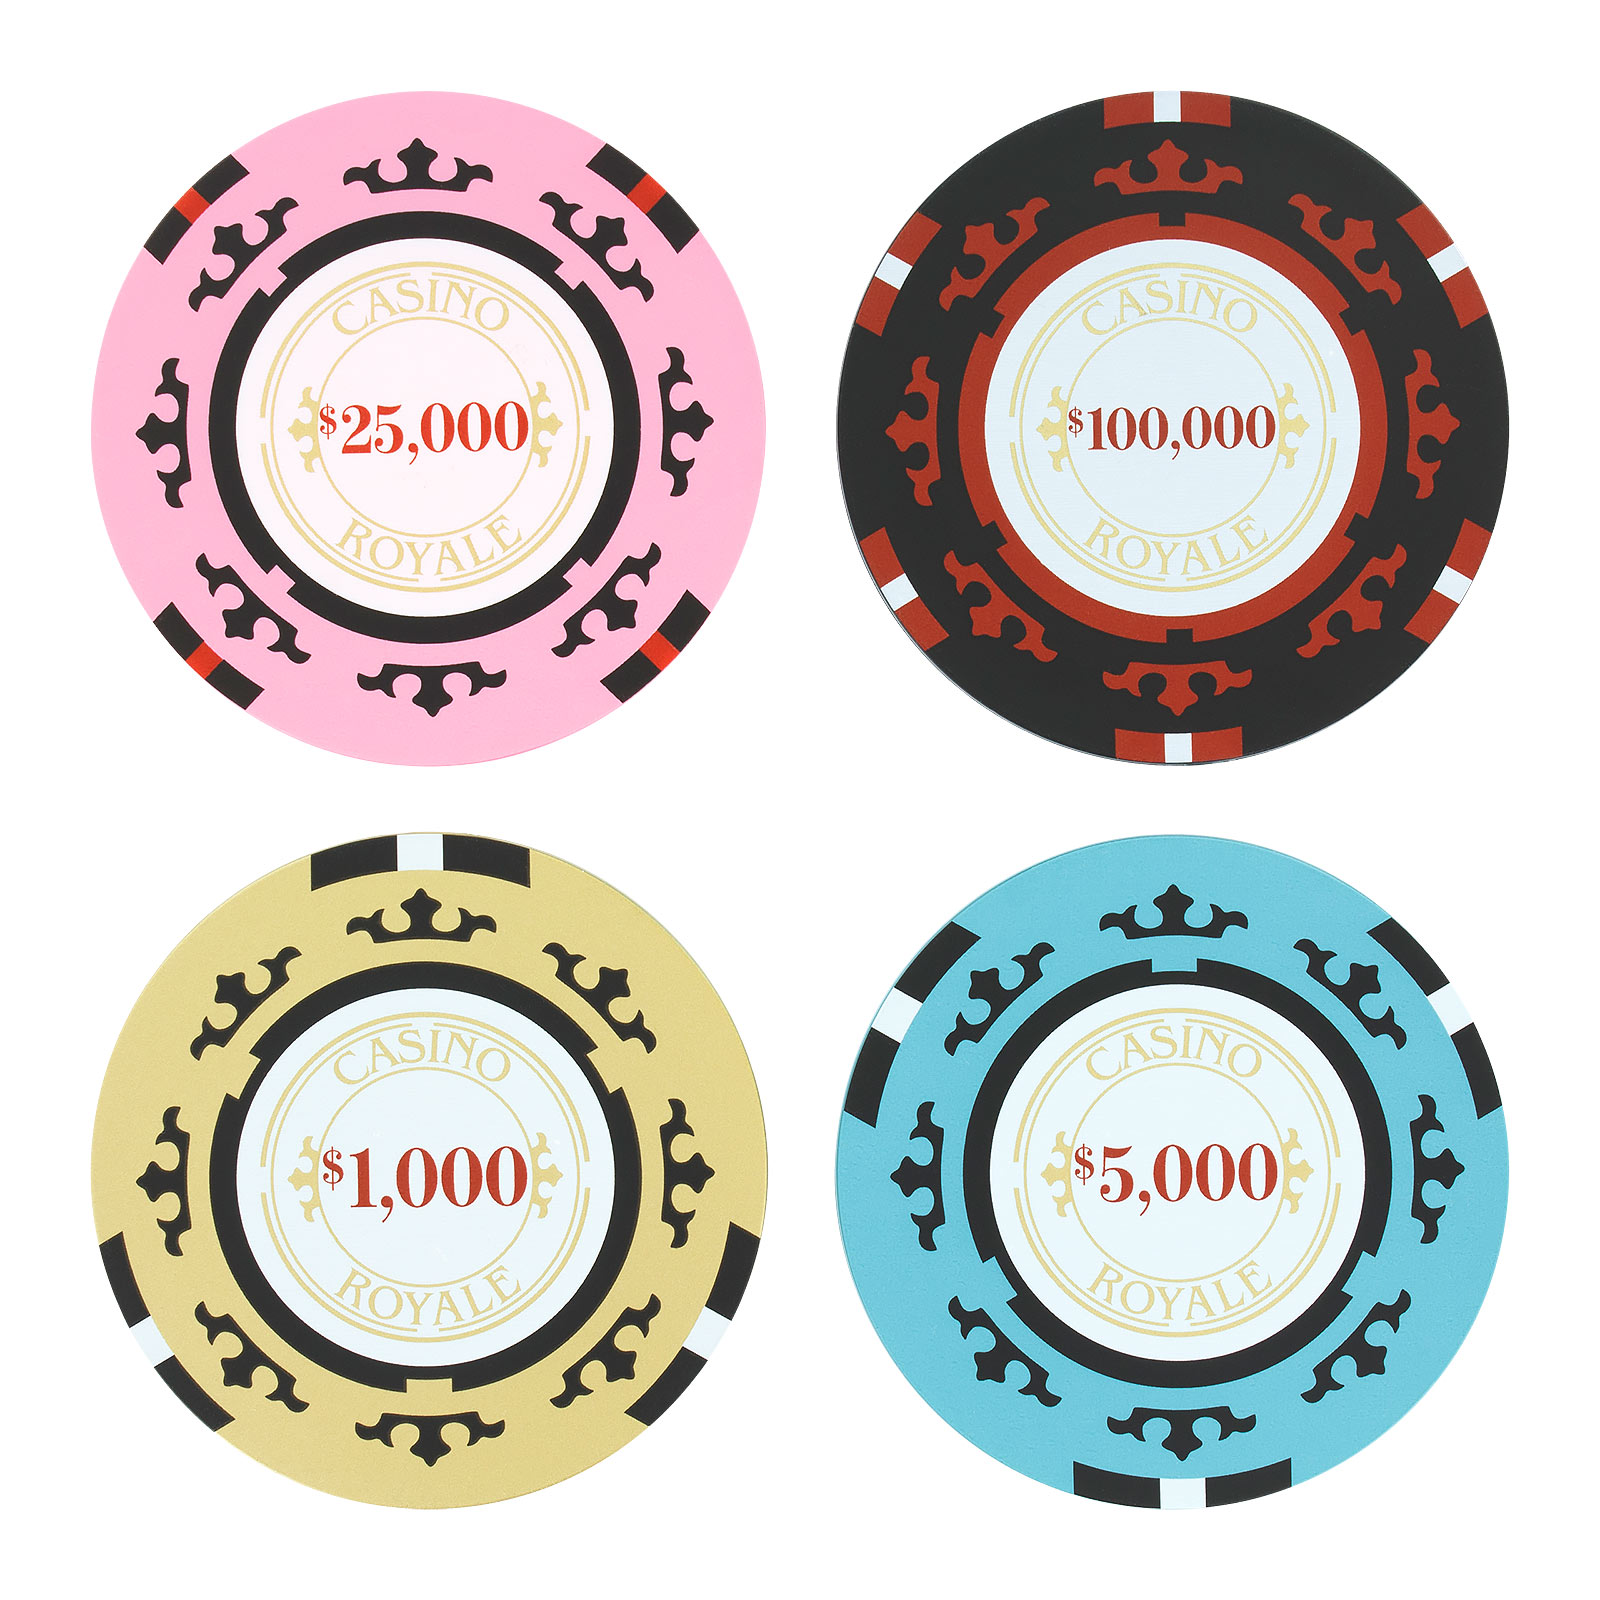 James Bond - Casino Royale Poker Chip Coasters Set of 4